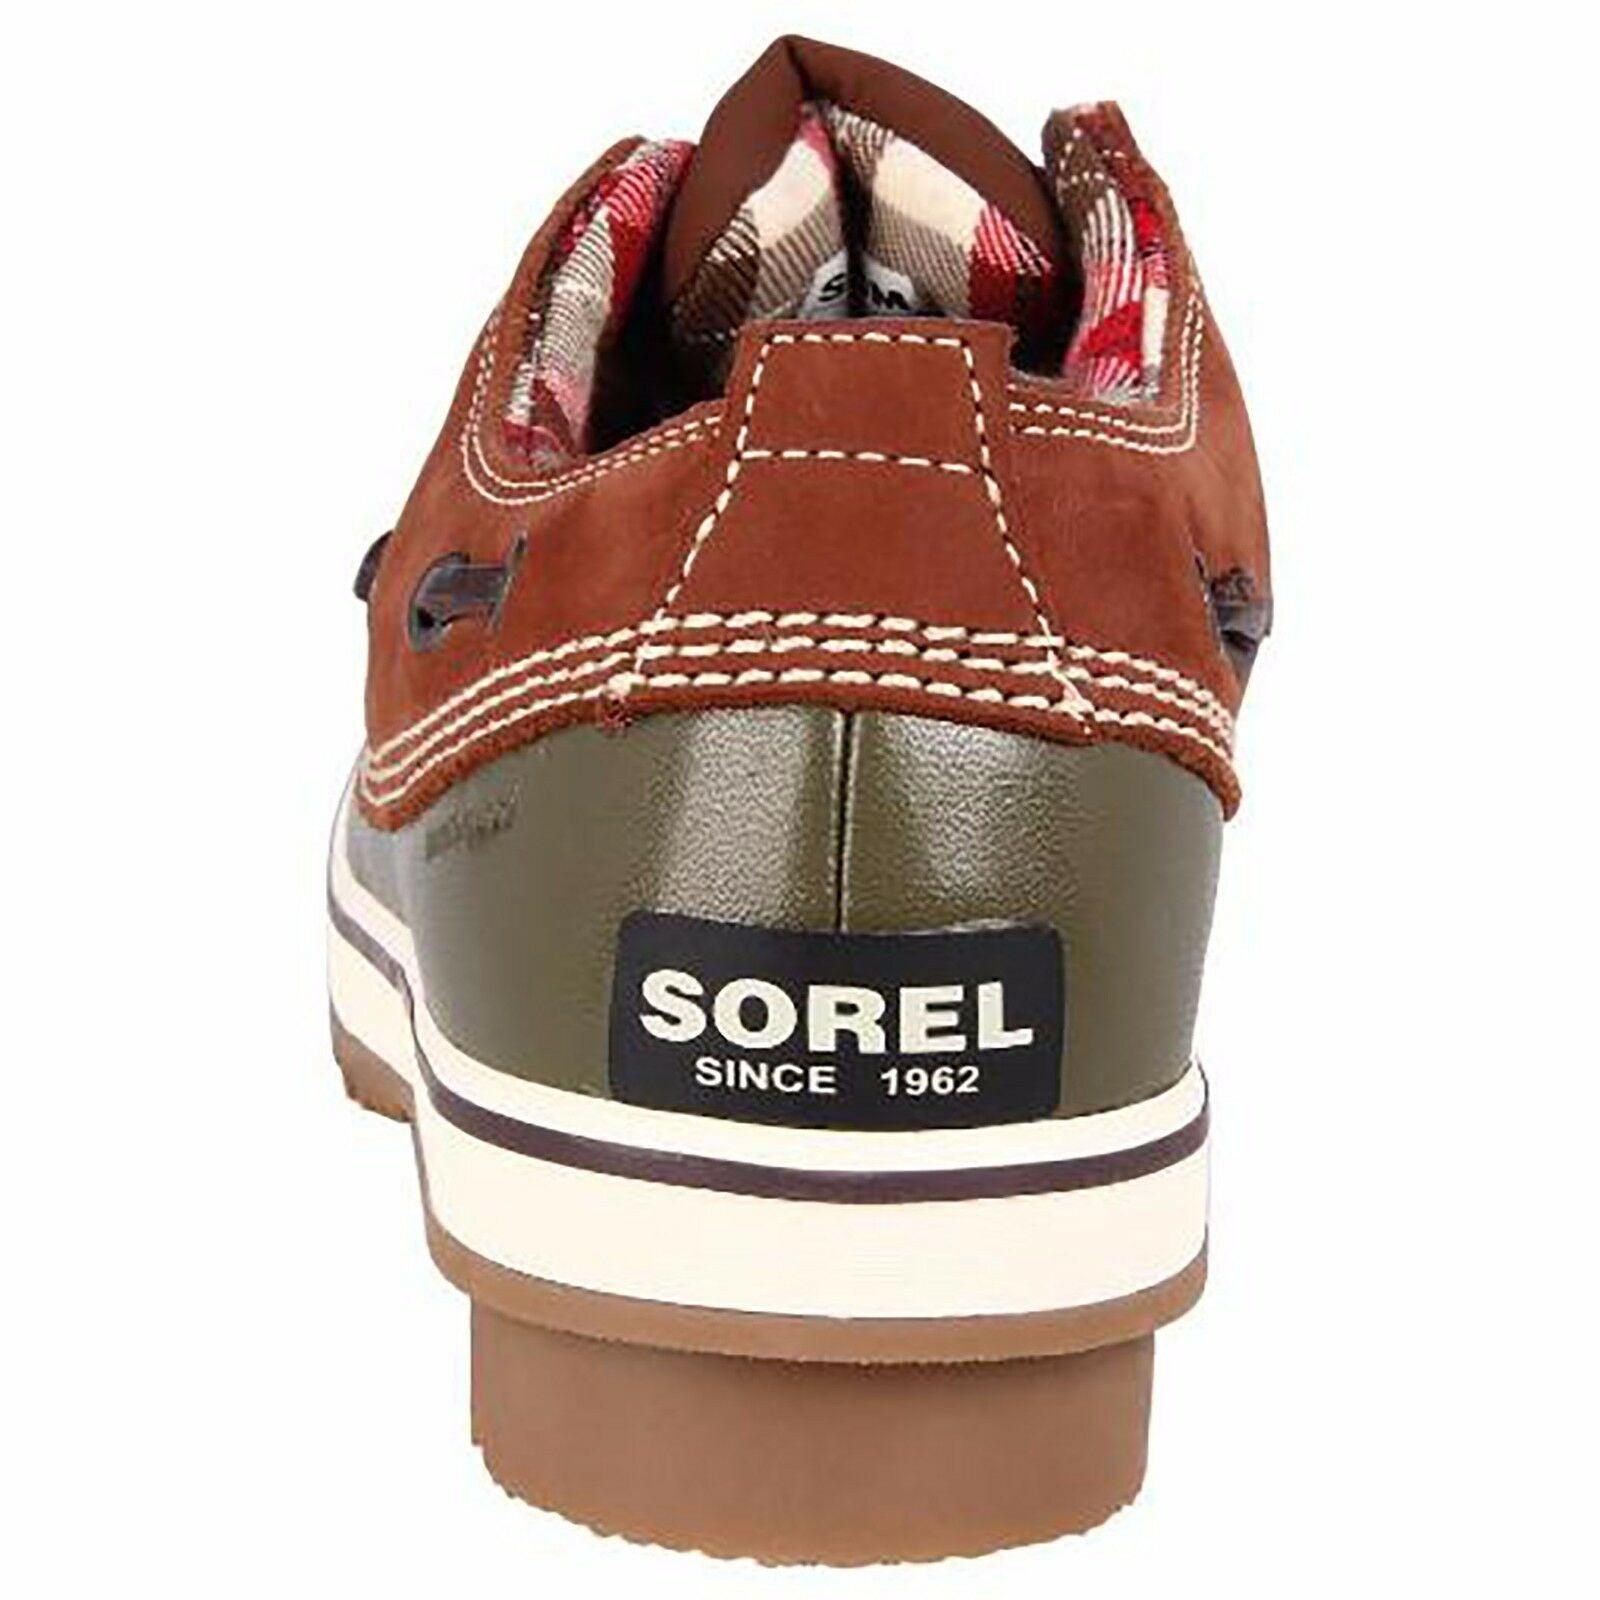 Sorel Tivoli Low Womens Winter Snow Brown Leather Waterproof Shoes Size 5 M - SVNYFancy